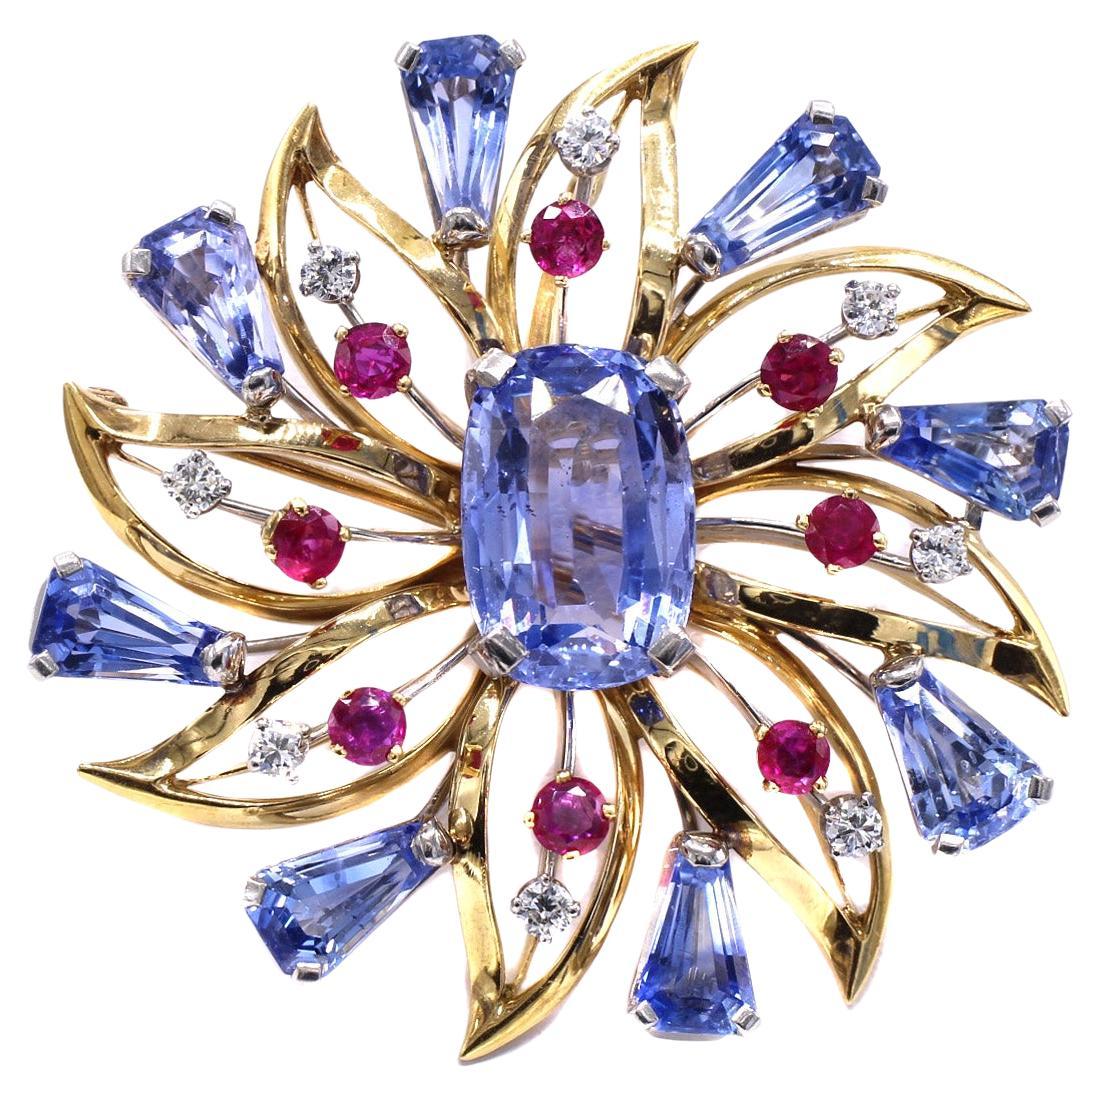 Oscar Heyman Broche en or jaune 18 carats, saphir, rubis et diamants